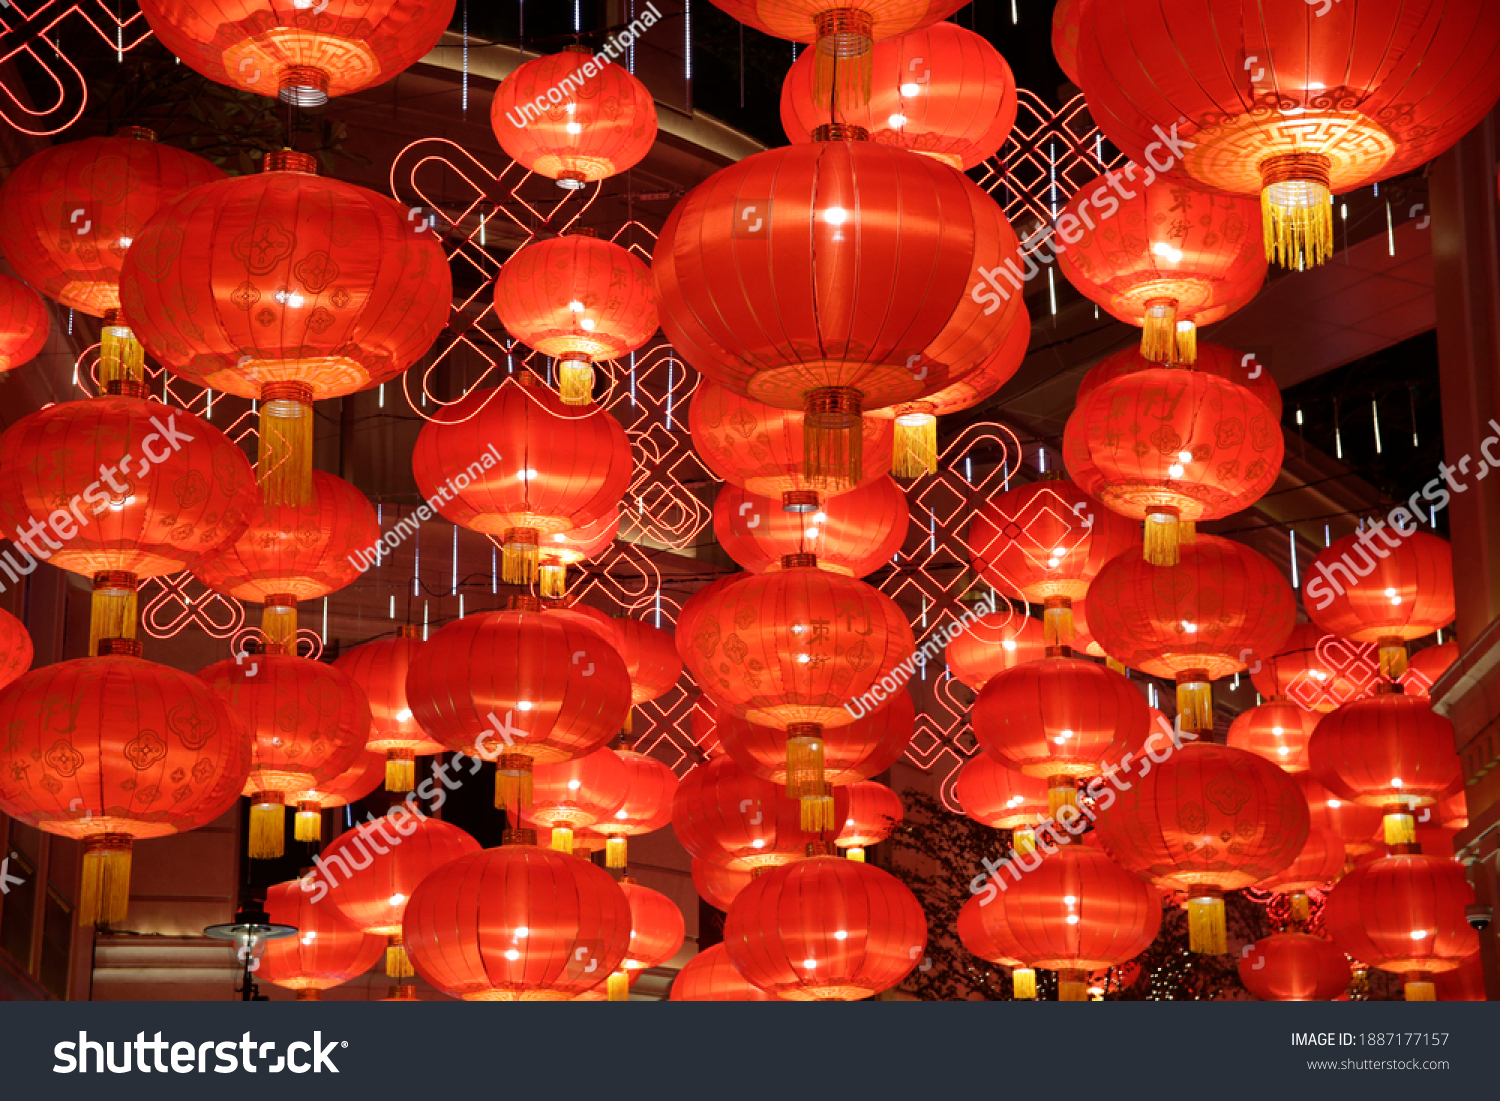 Festive lanterns for Chinese New Year celebration. Decoration, illumination, lighting and bright symbol of holiday event. #1887177157